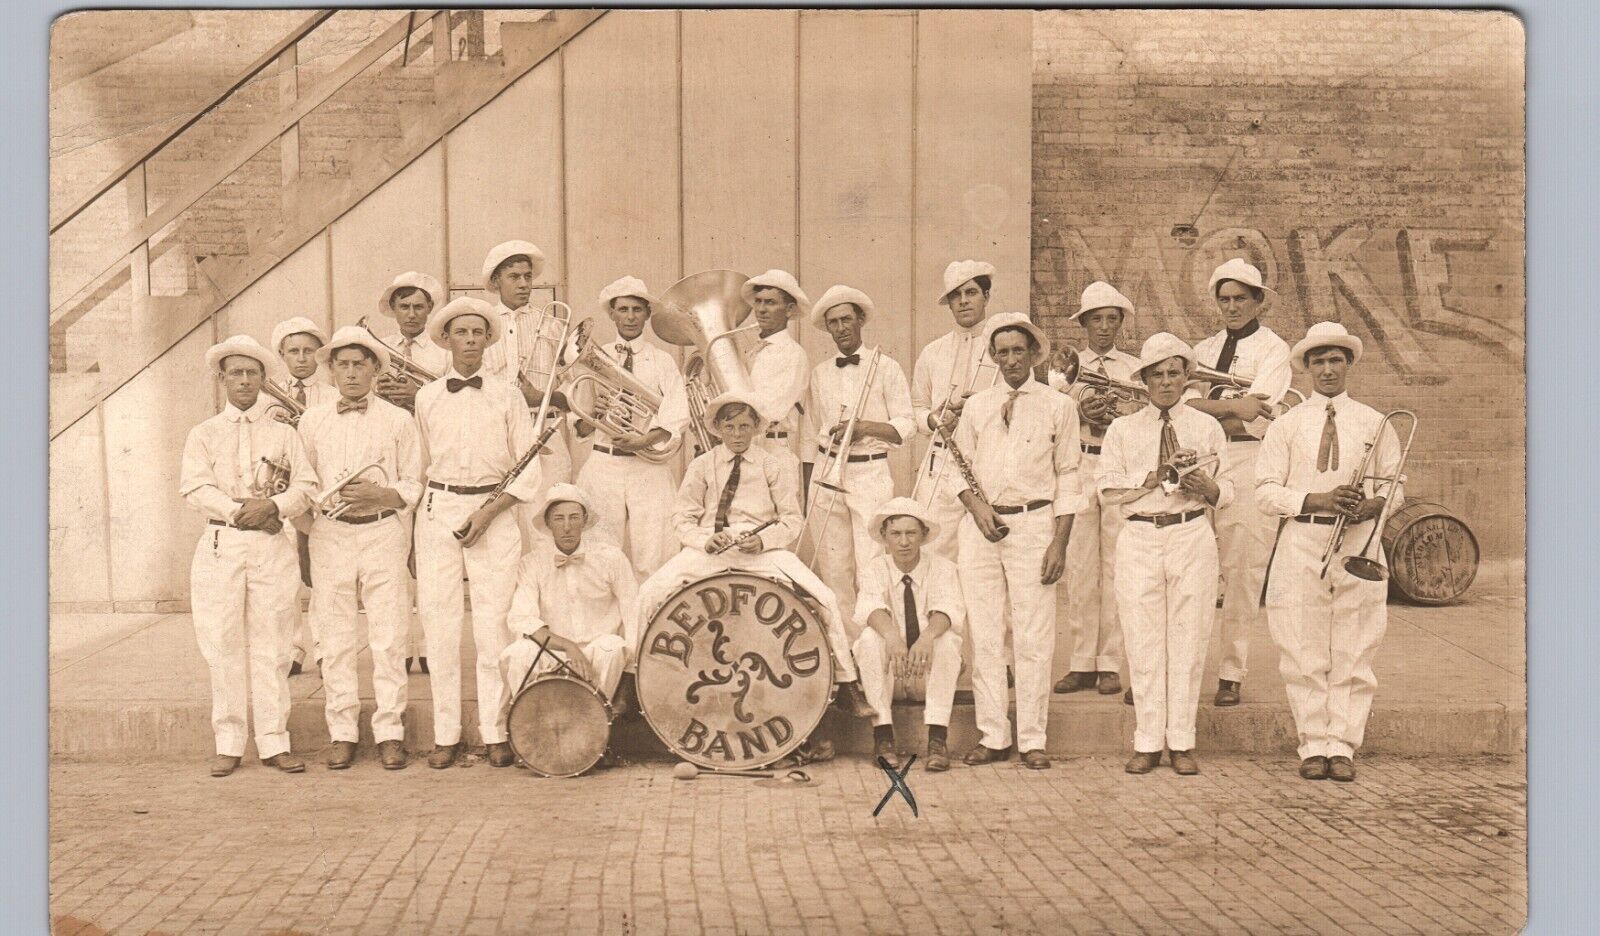 CITY MARCHING BAND bedford ia real photo postcard rppc iowa parade music history